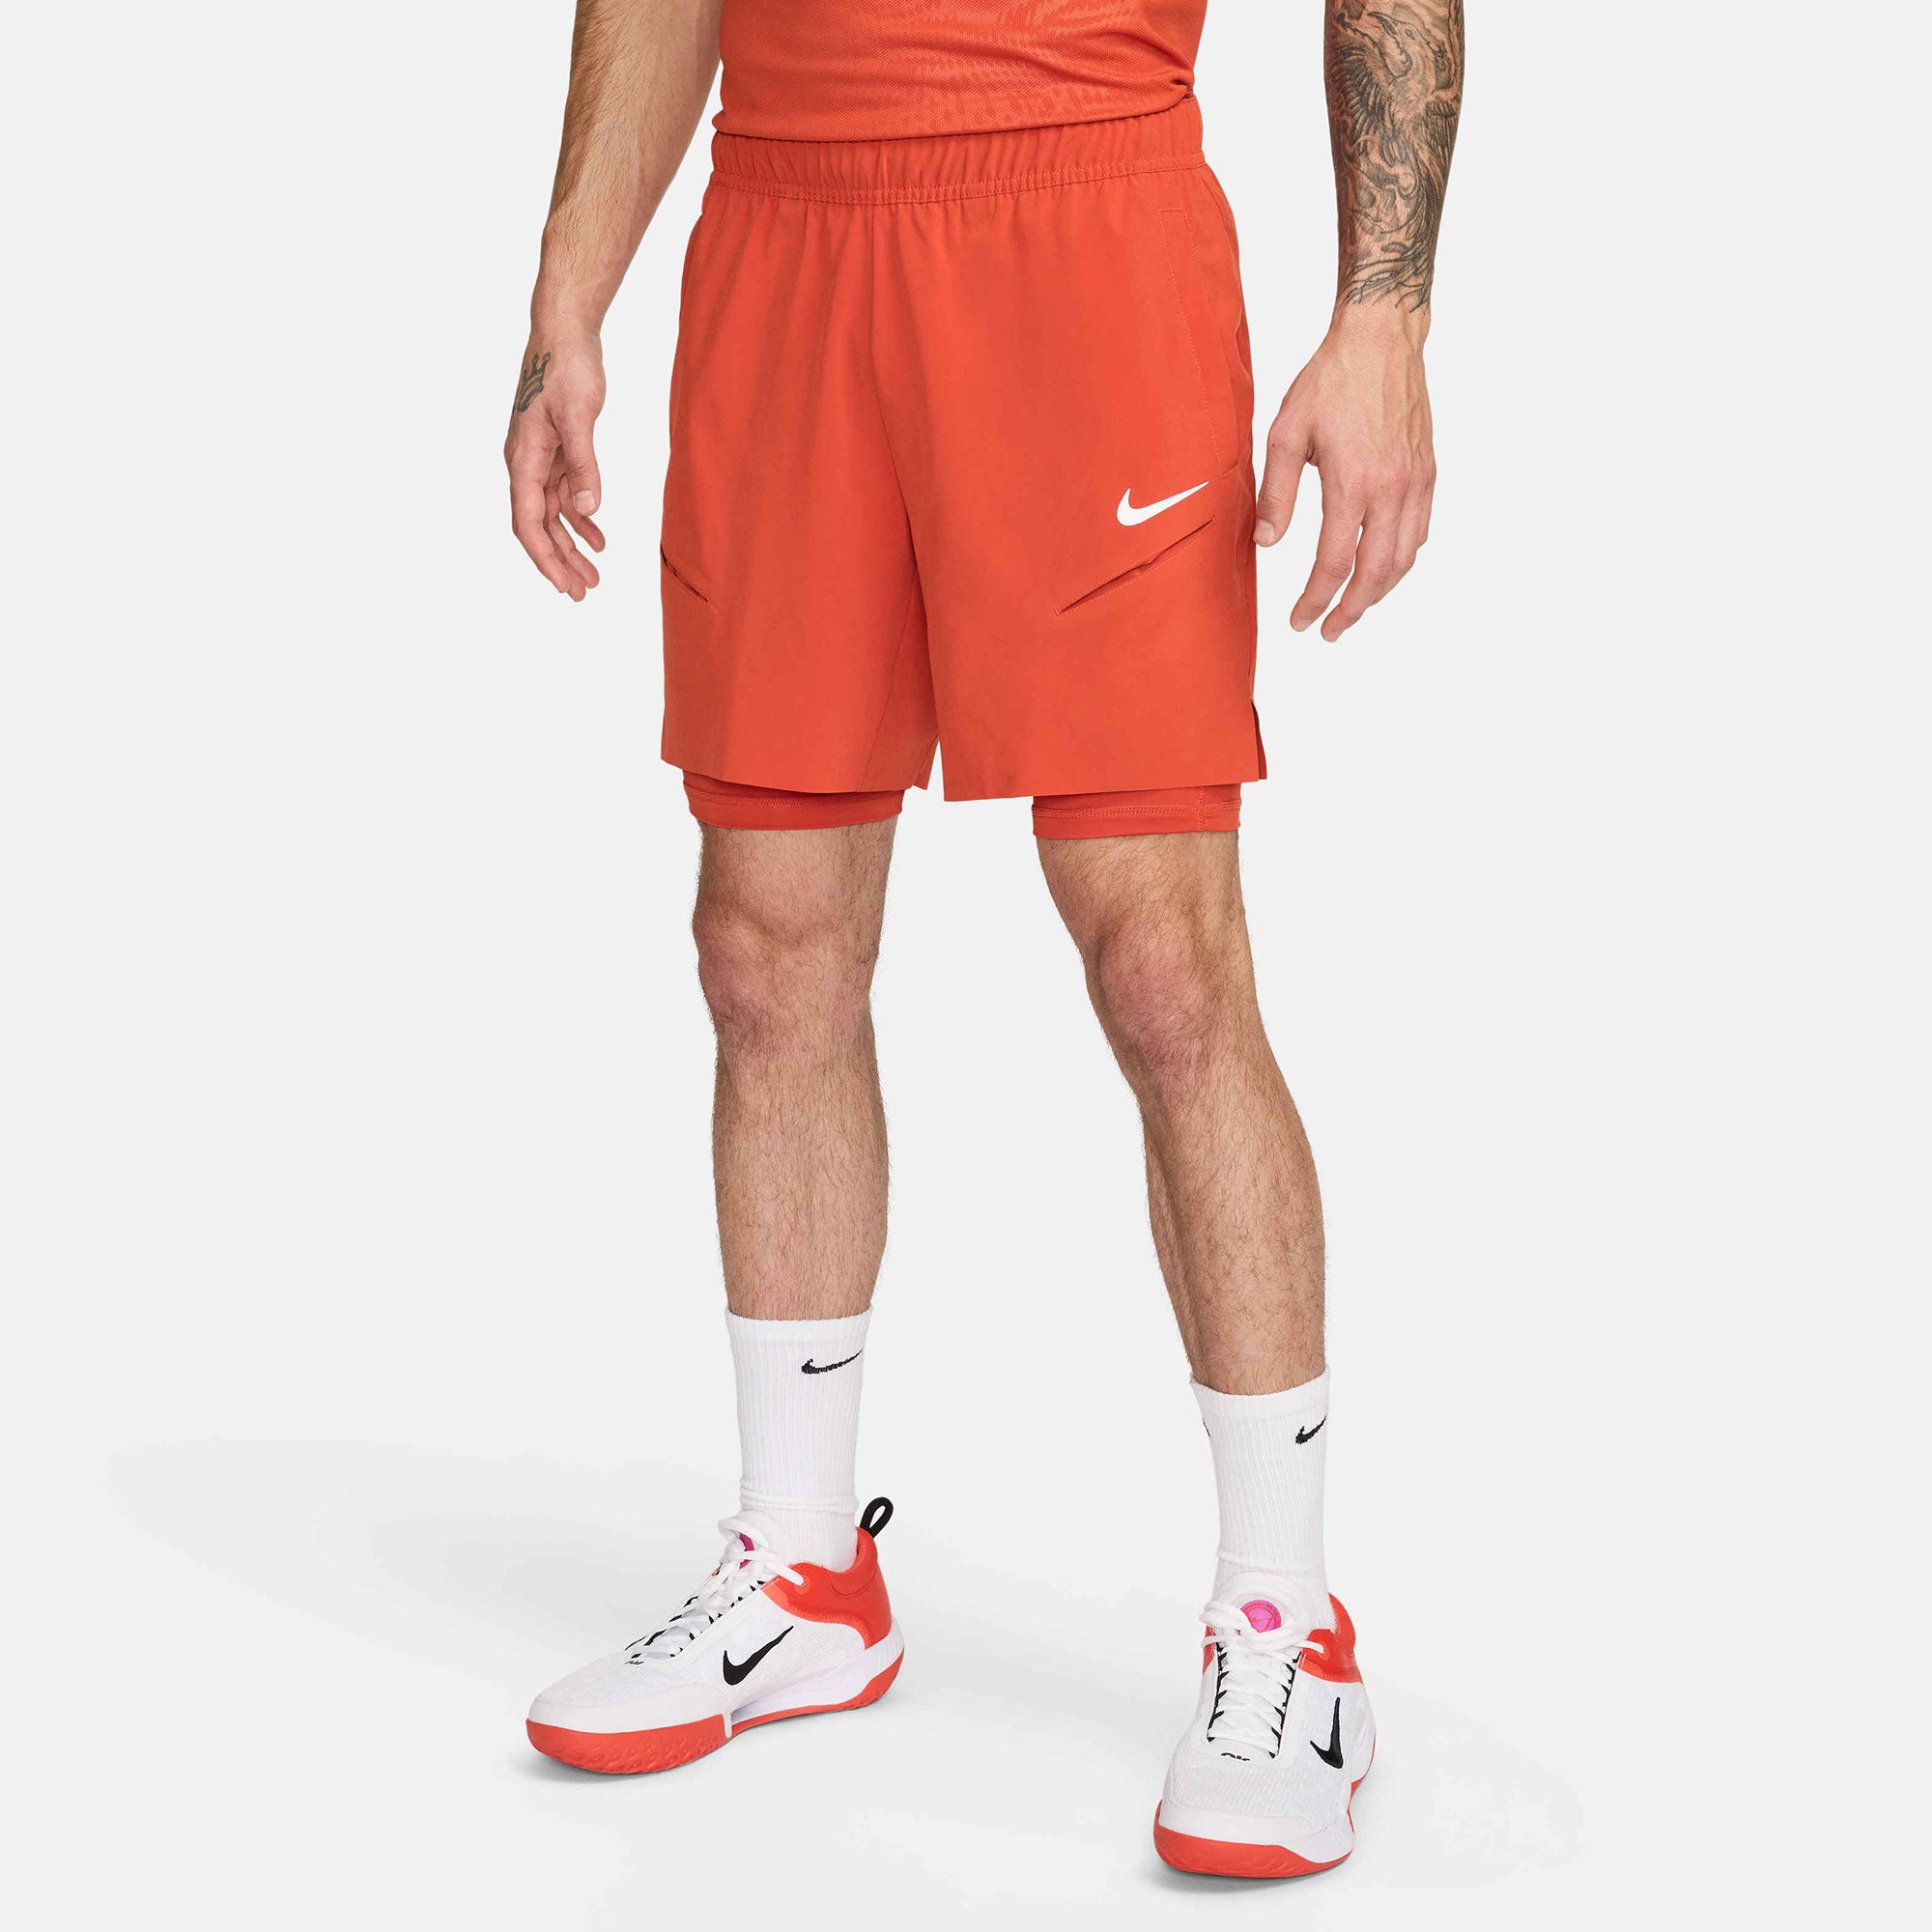 NikeCourt Slam Paris Men's Dri-FIT Tennis Shorts - Orange (1)